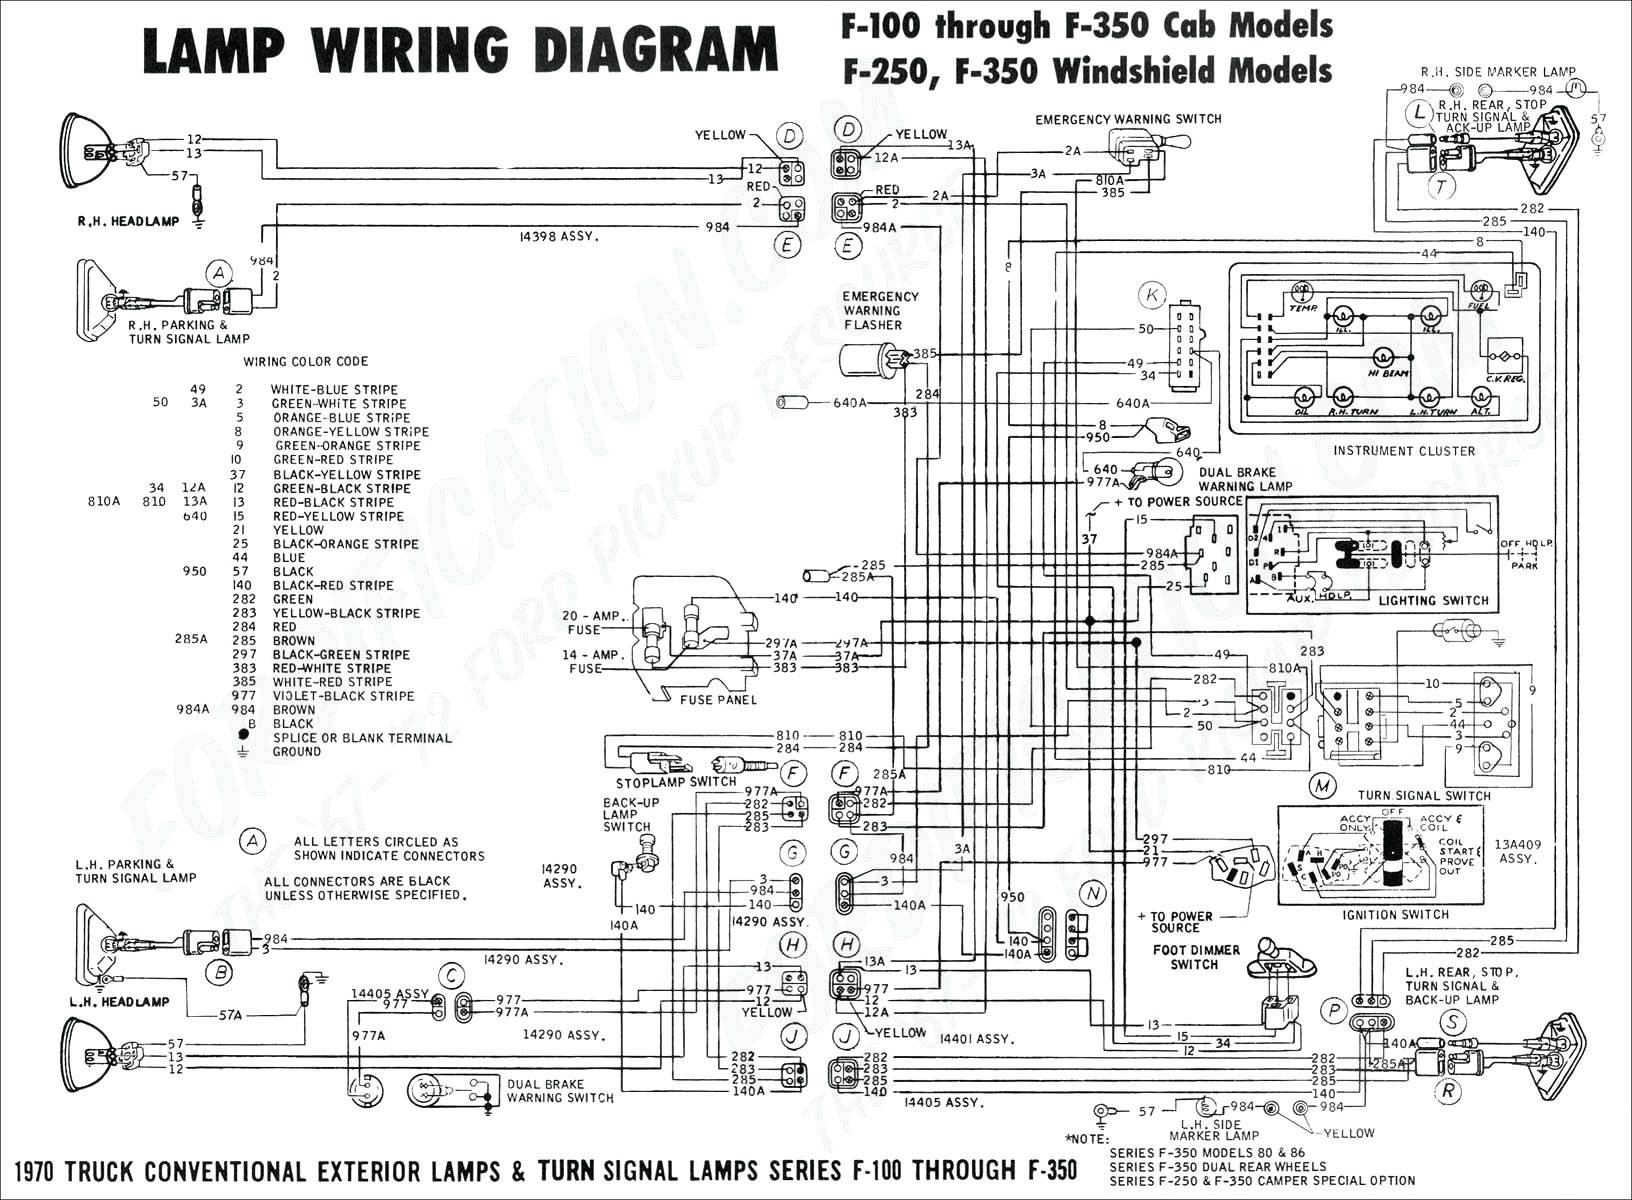 2008 chevy silverado wiring diagram windshield heated data wiring u2022 rh kshjgn pw 2001 Chevy Silverado Wiring Diagram 2007 Chevy Silverado Wiring Diagram